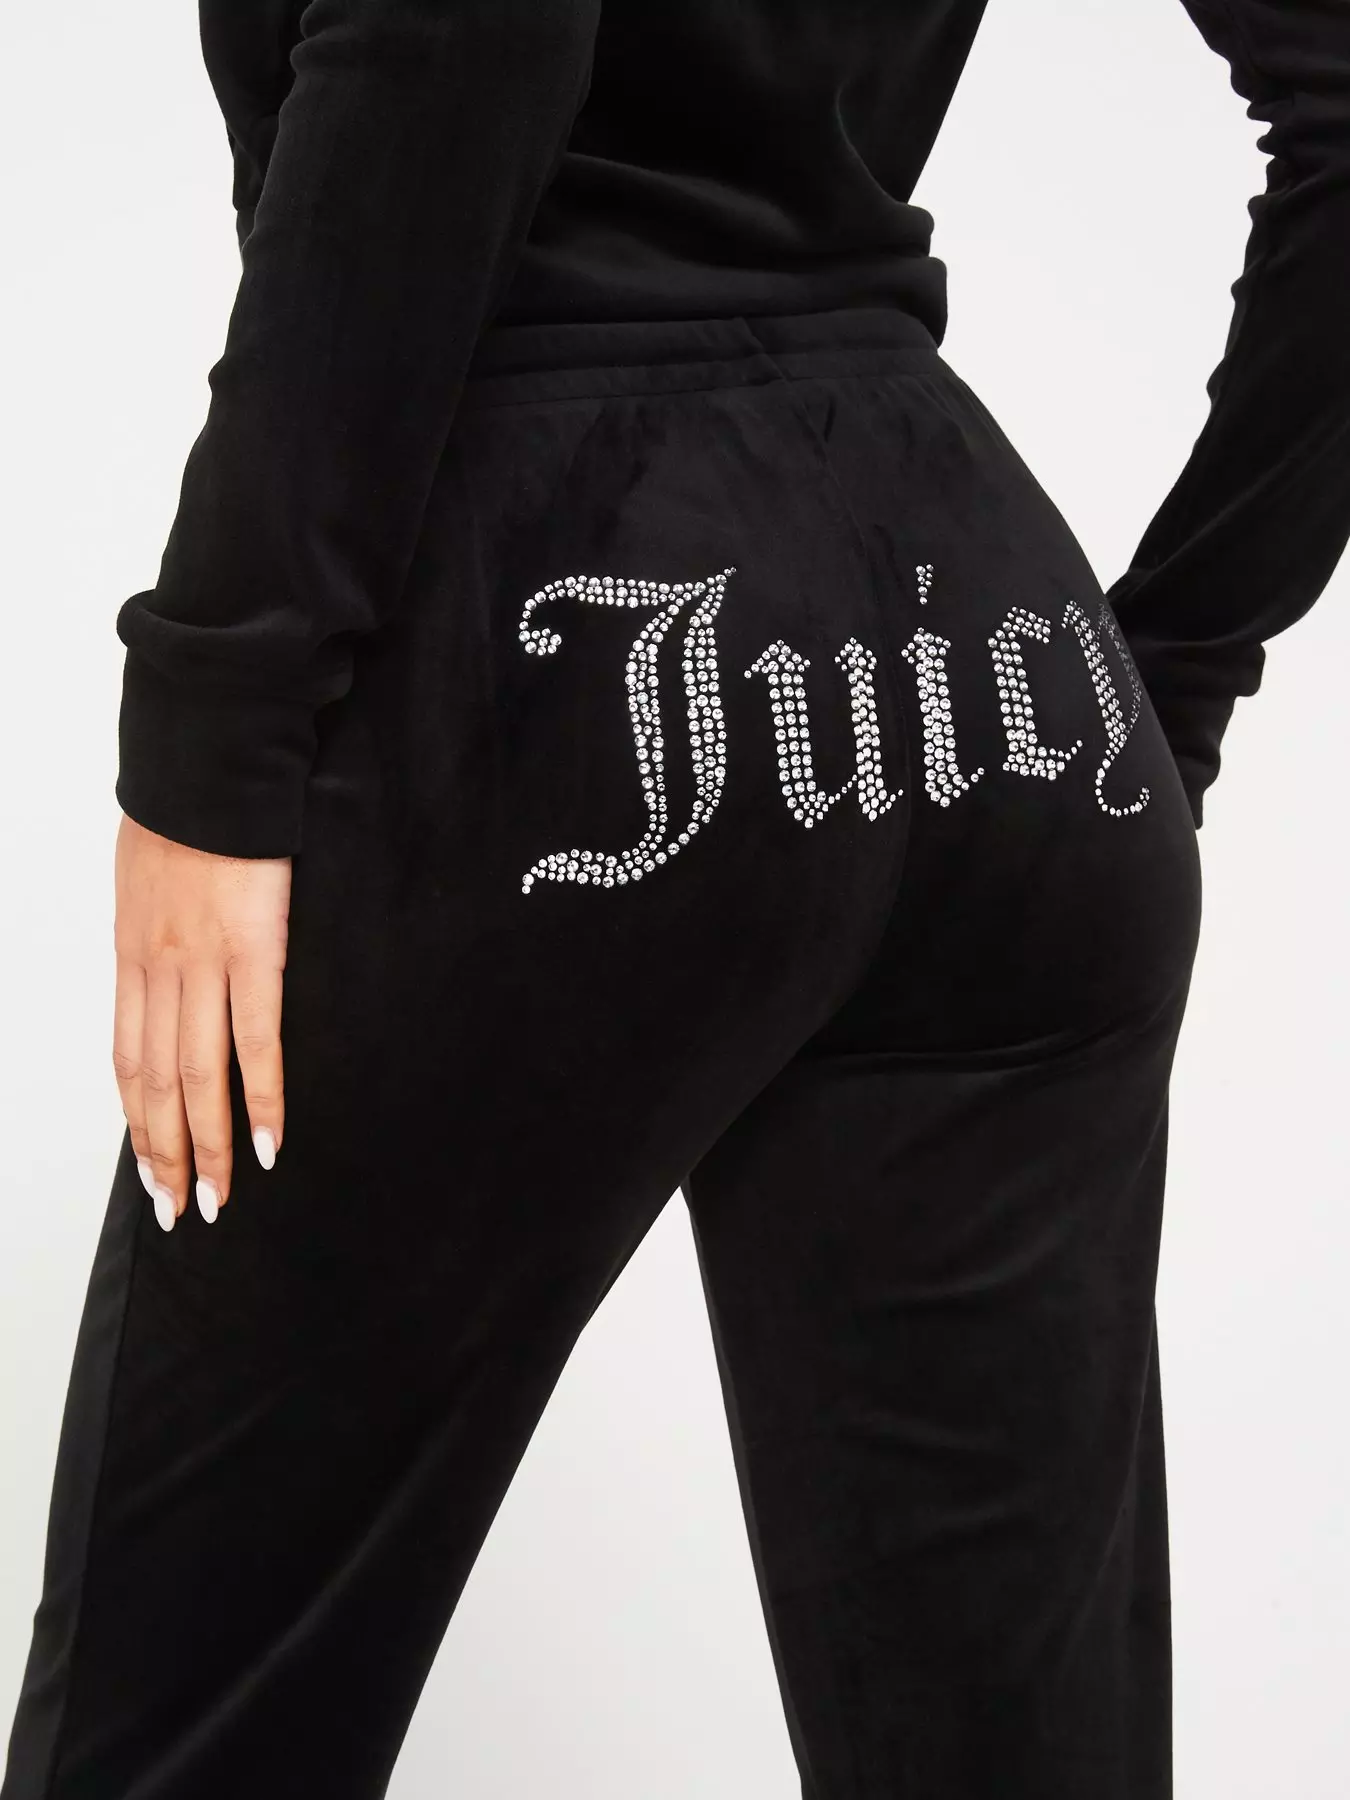 Juicy Couture Sport Grey/Blue/Black Leggings- Size S (Inseam 25